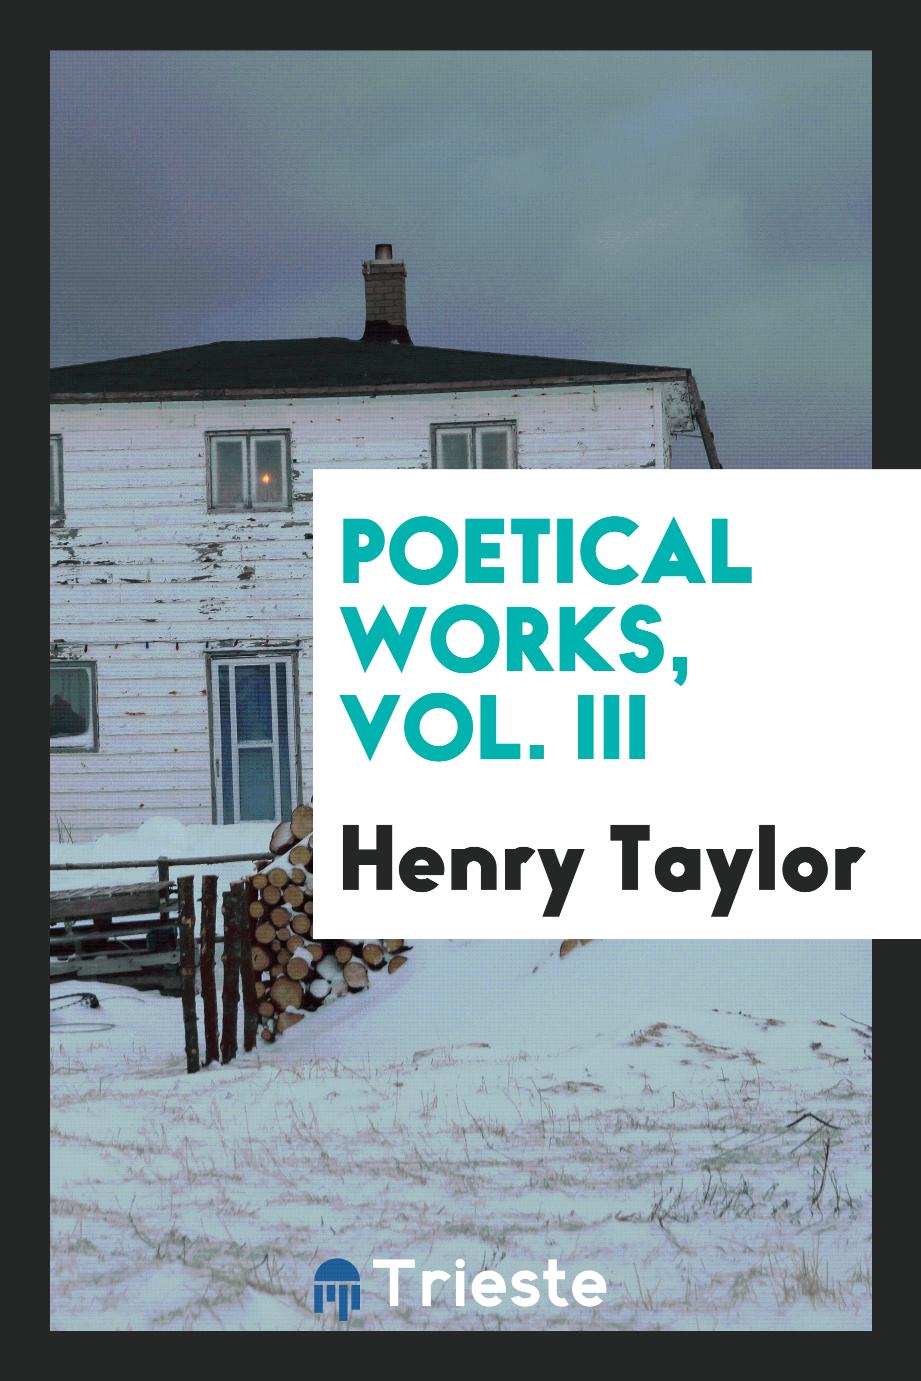 Poetical works, Vol. III